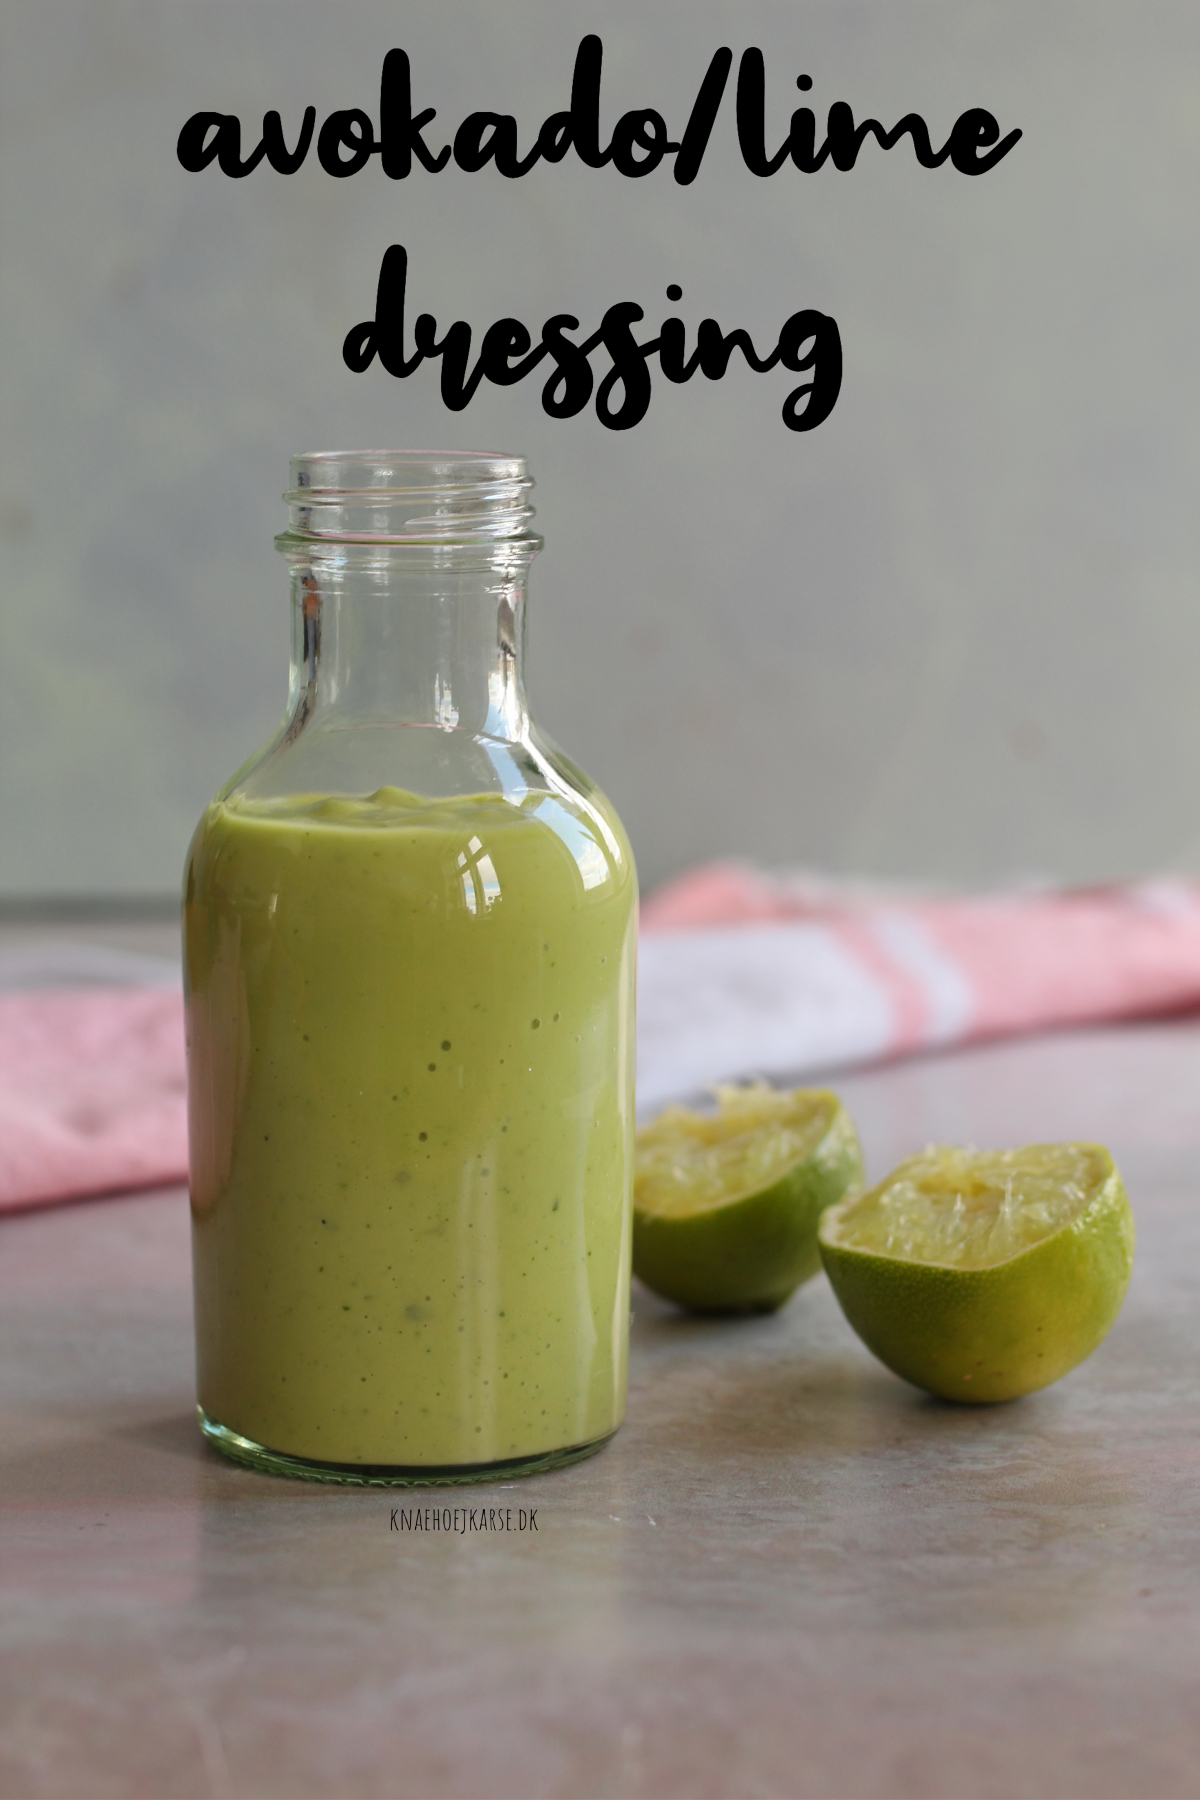 avokado/lime dressing